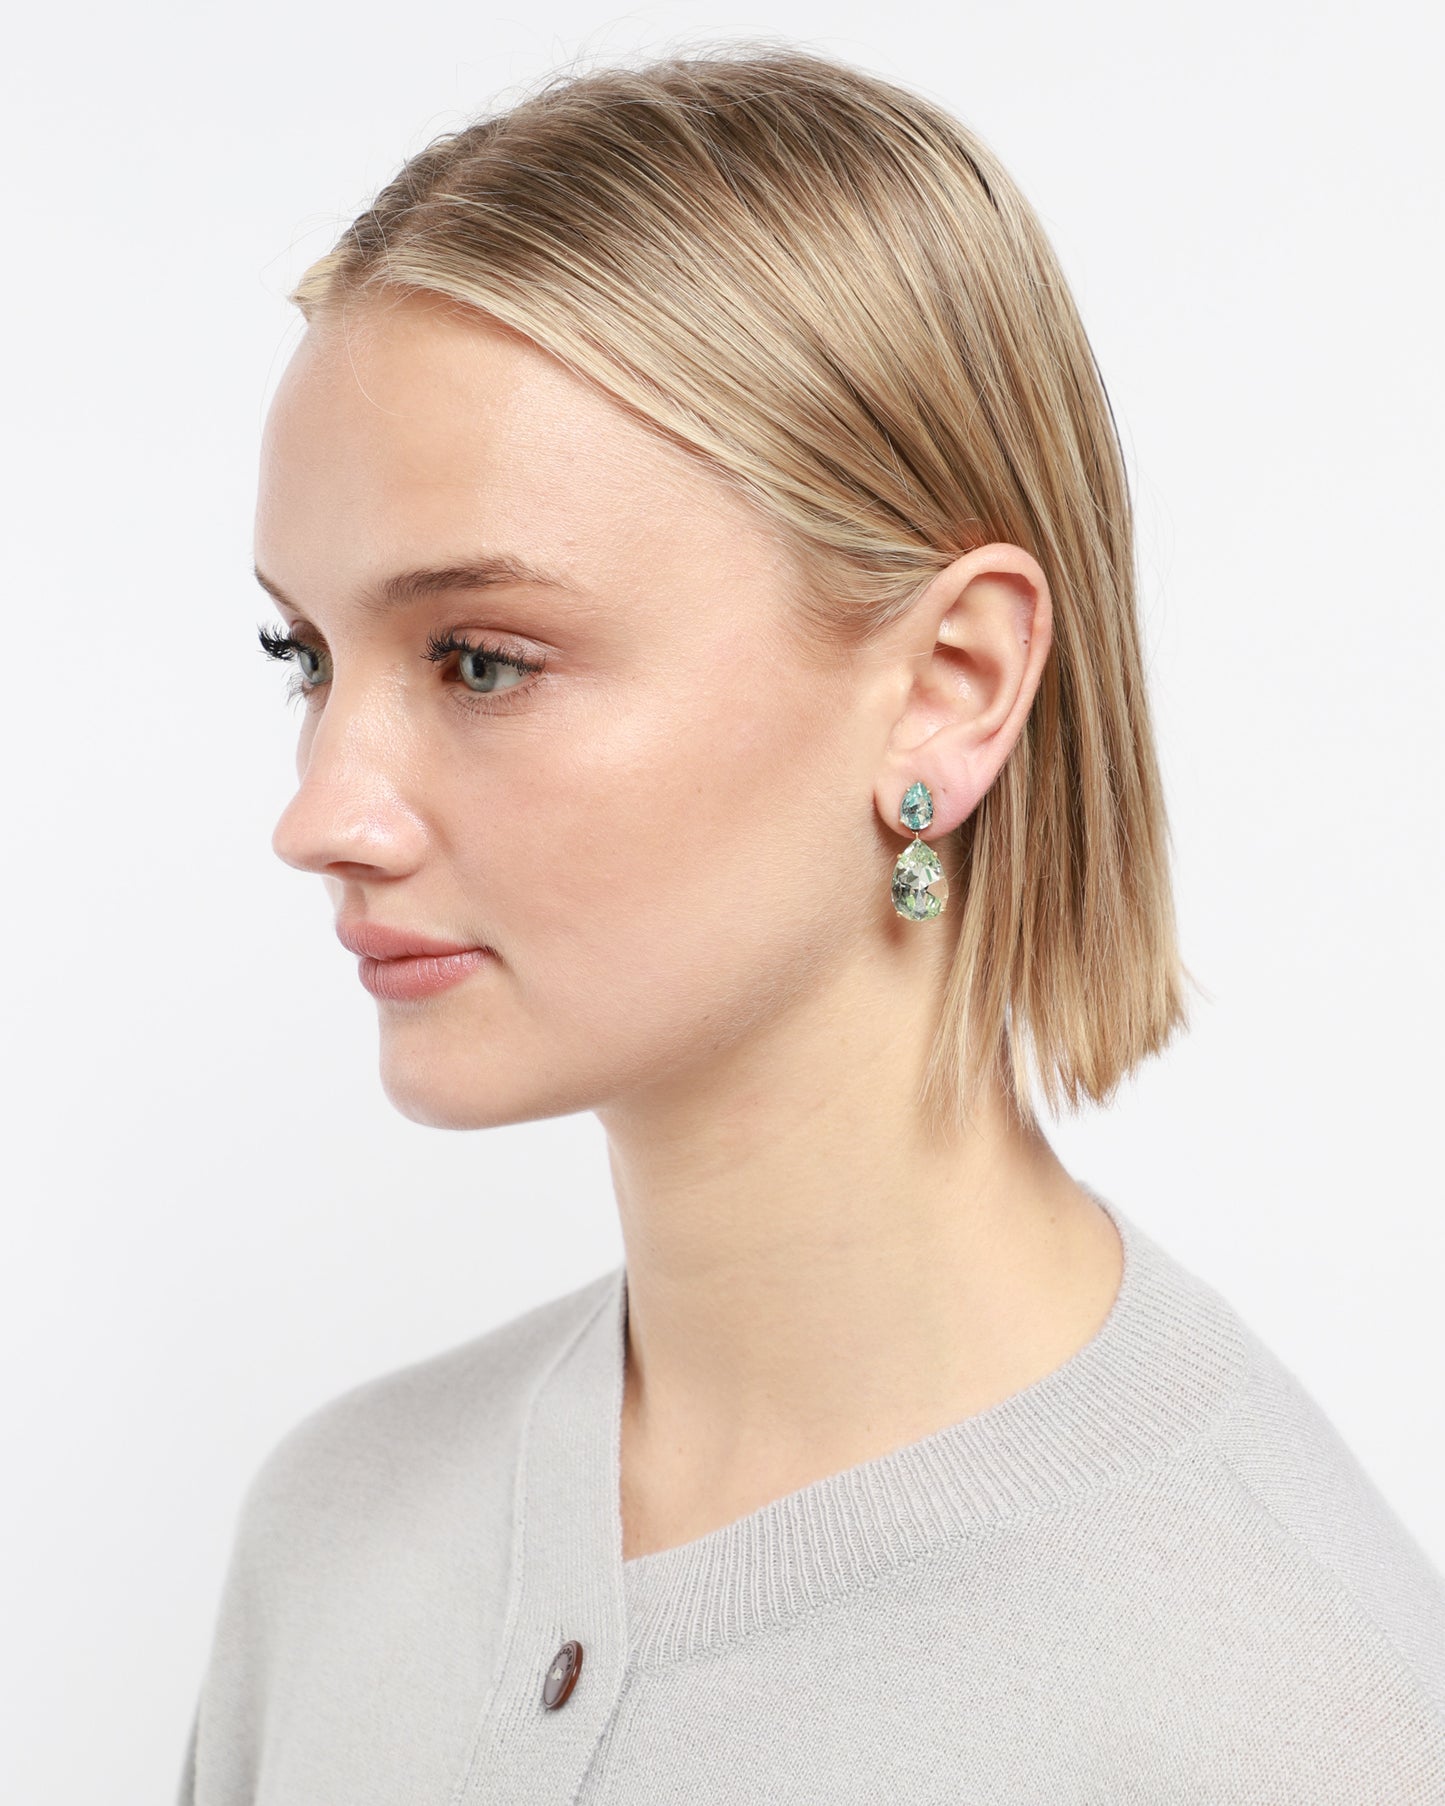 The Inner Glow Earrings